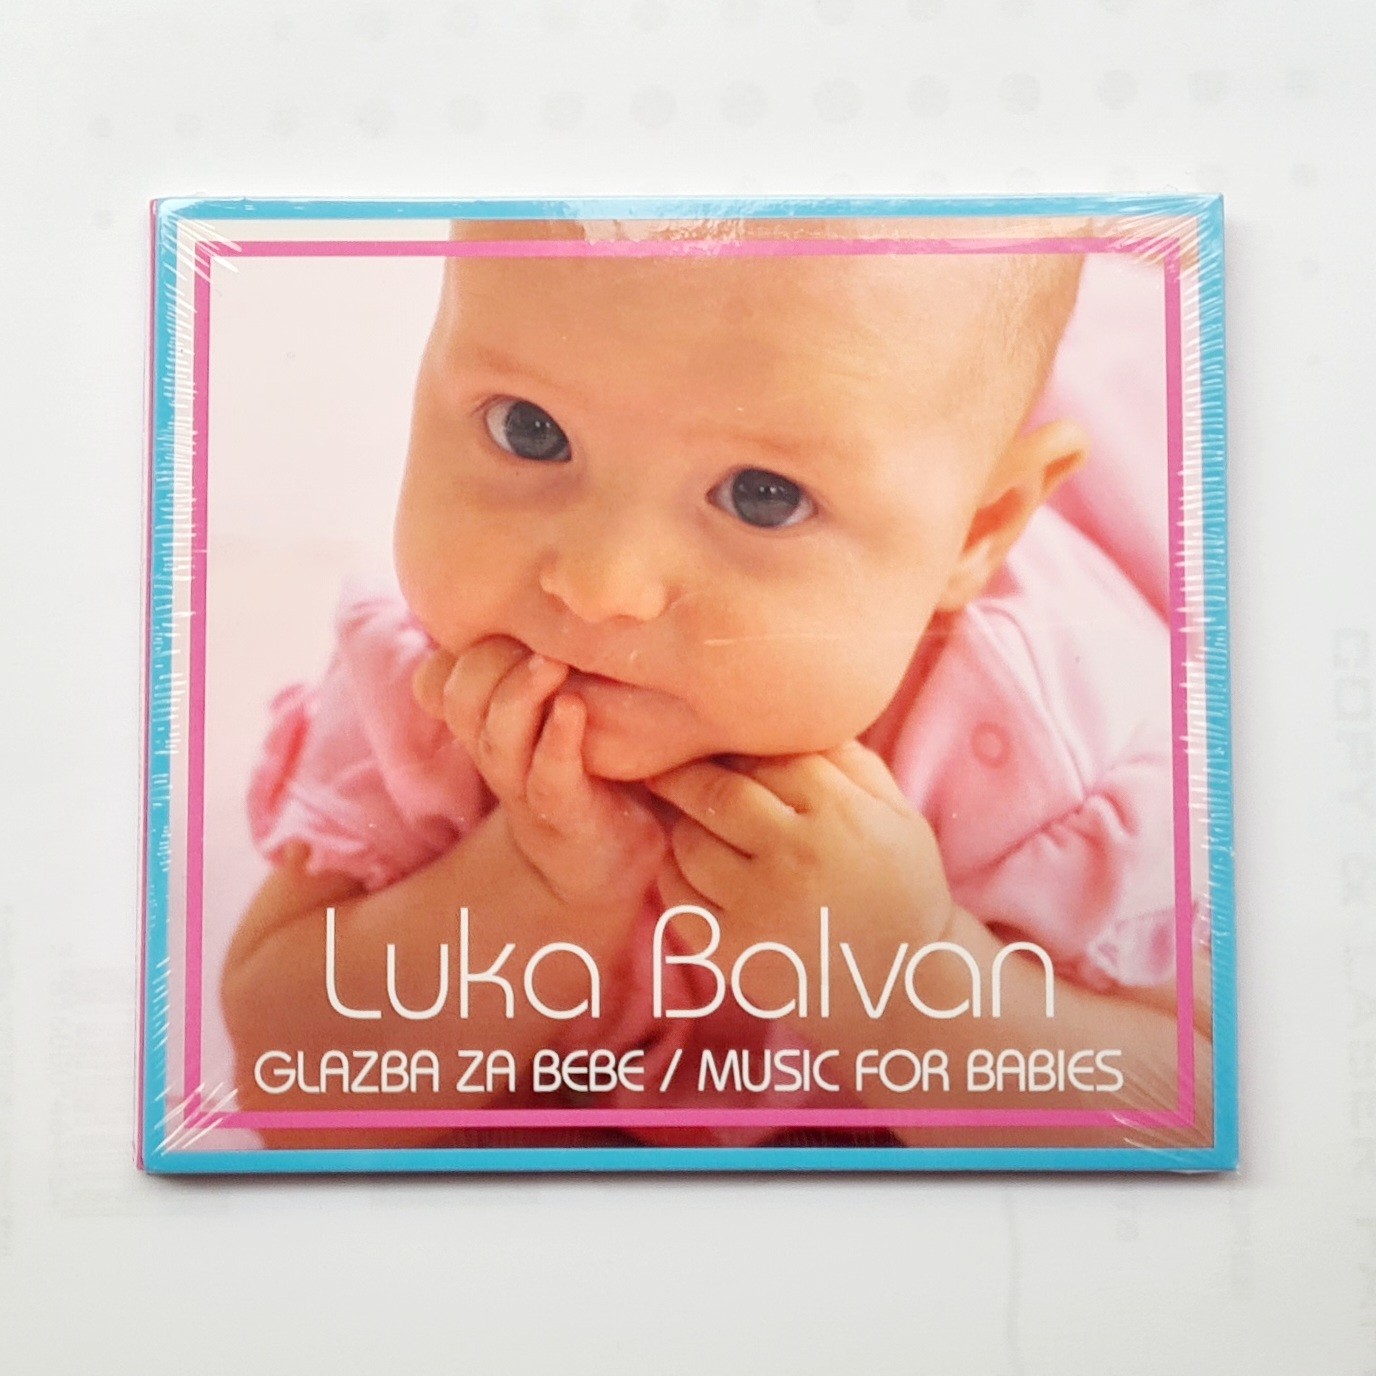 CD "Glazba za bebe"